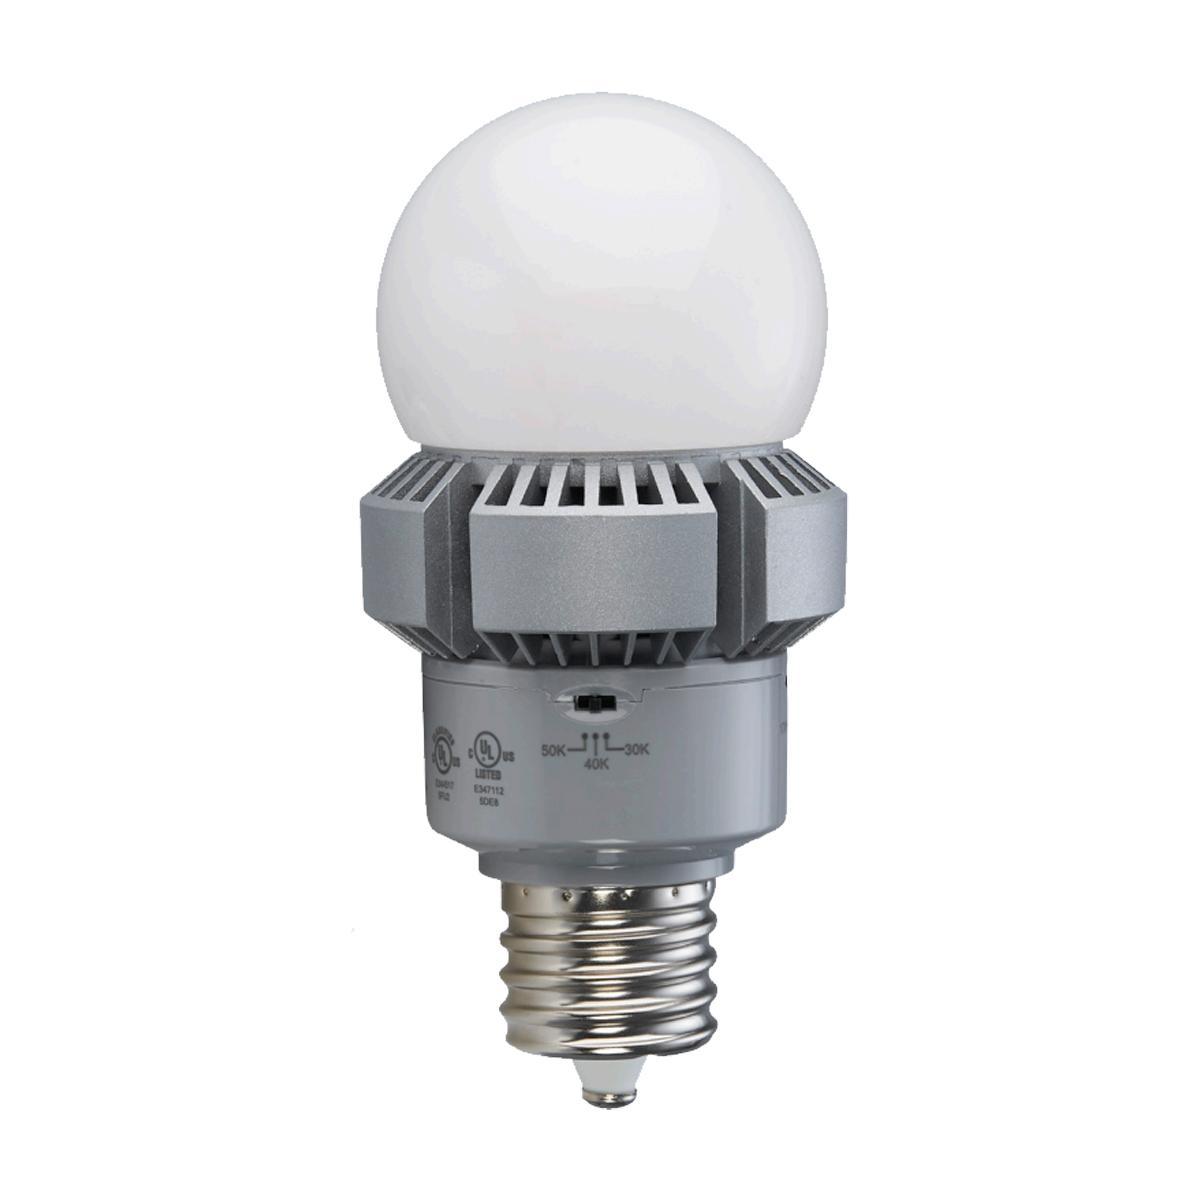 A23 LED Bulb, 36 Watt, 6075 Lumens, 30K/40K/50K, EX39 Mogul Extended Base, Frosted Finish